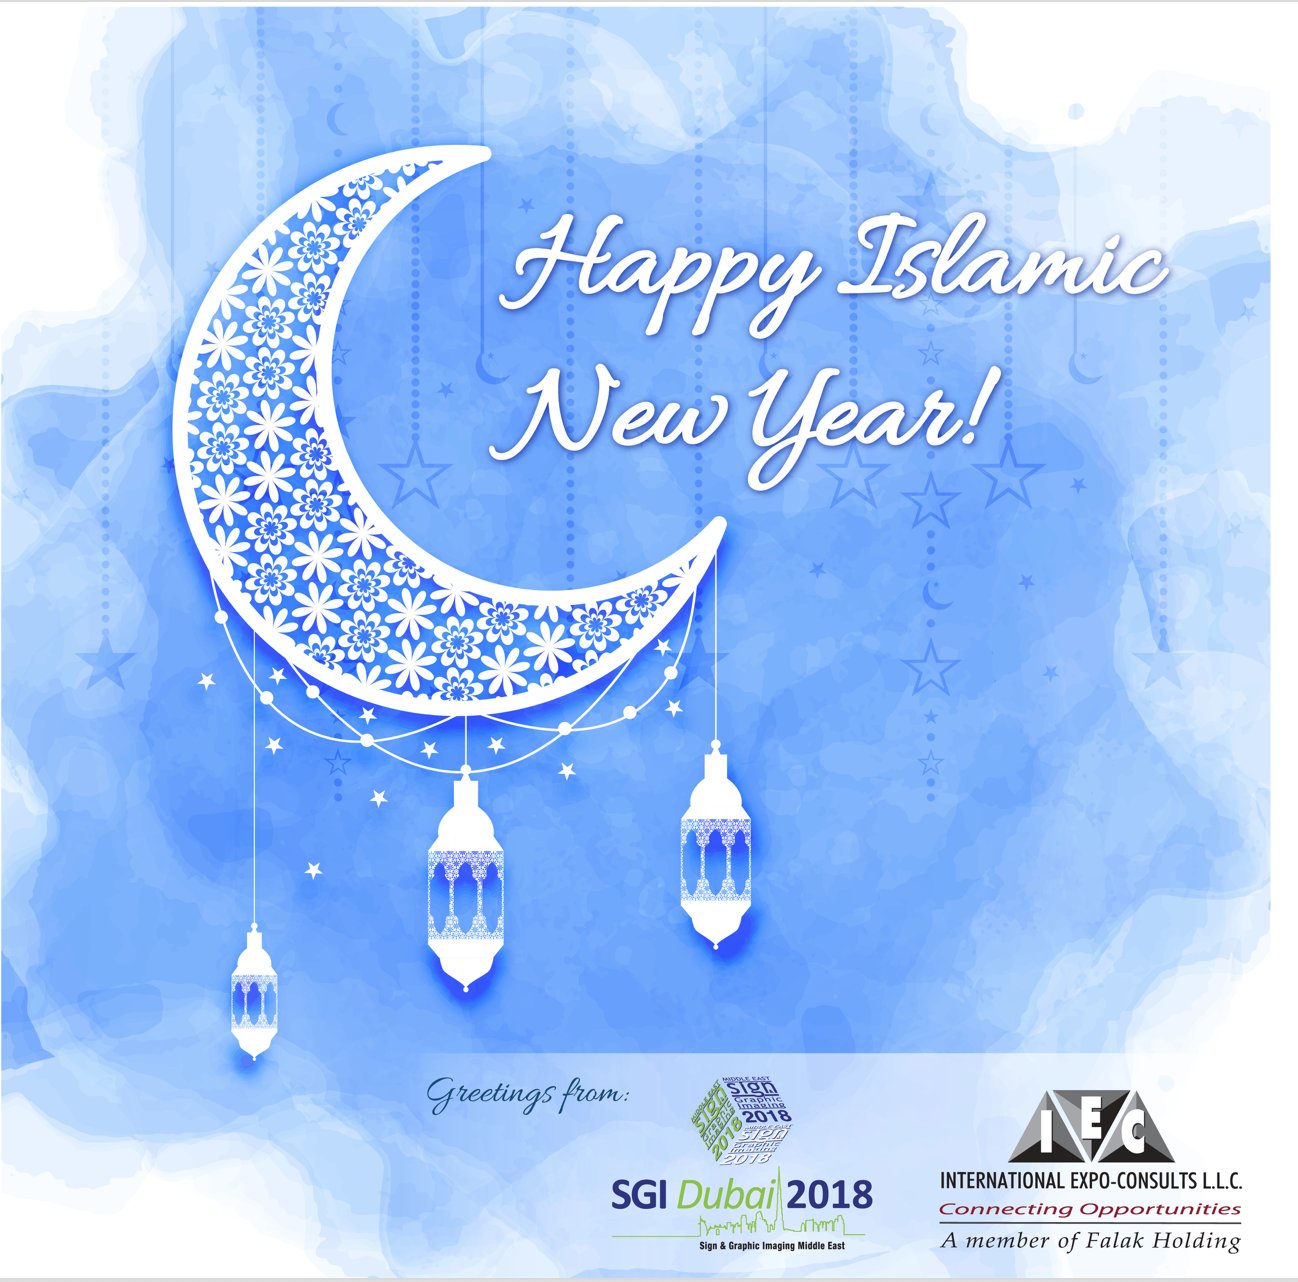 SGI Dubai 2019 on Twitter: "Happy Islamic New Year to  